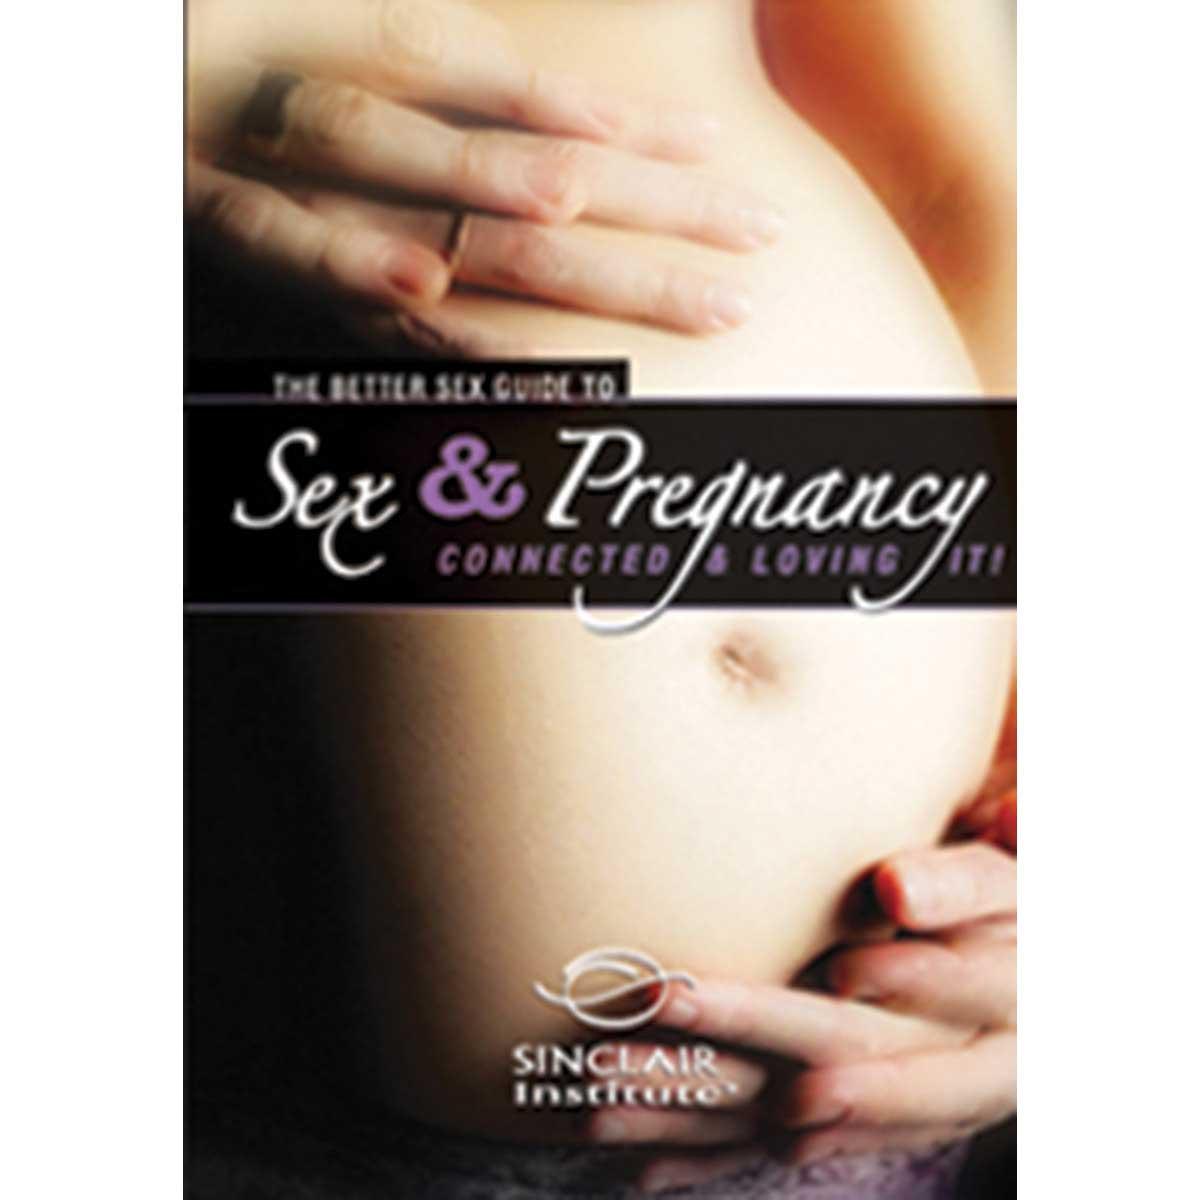 Sex & Pregnancy - Better Sex Guide